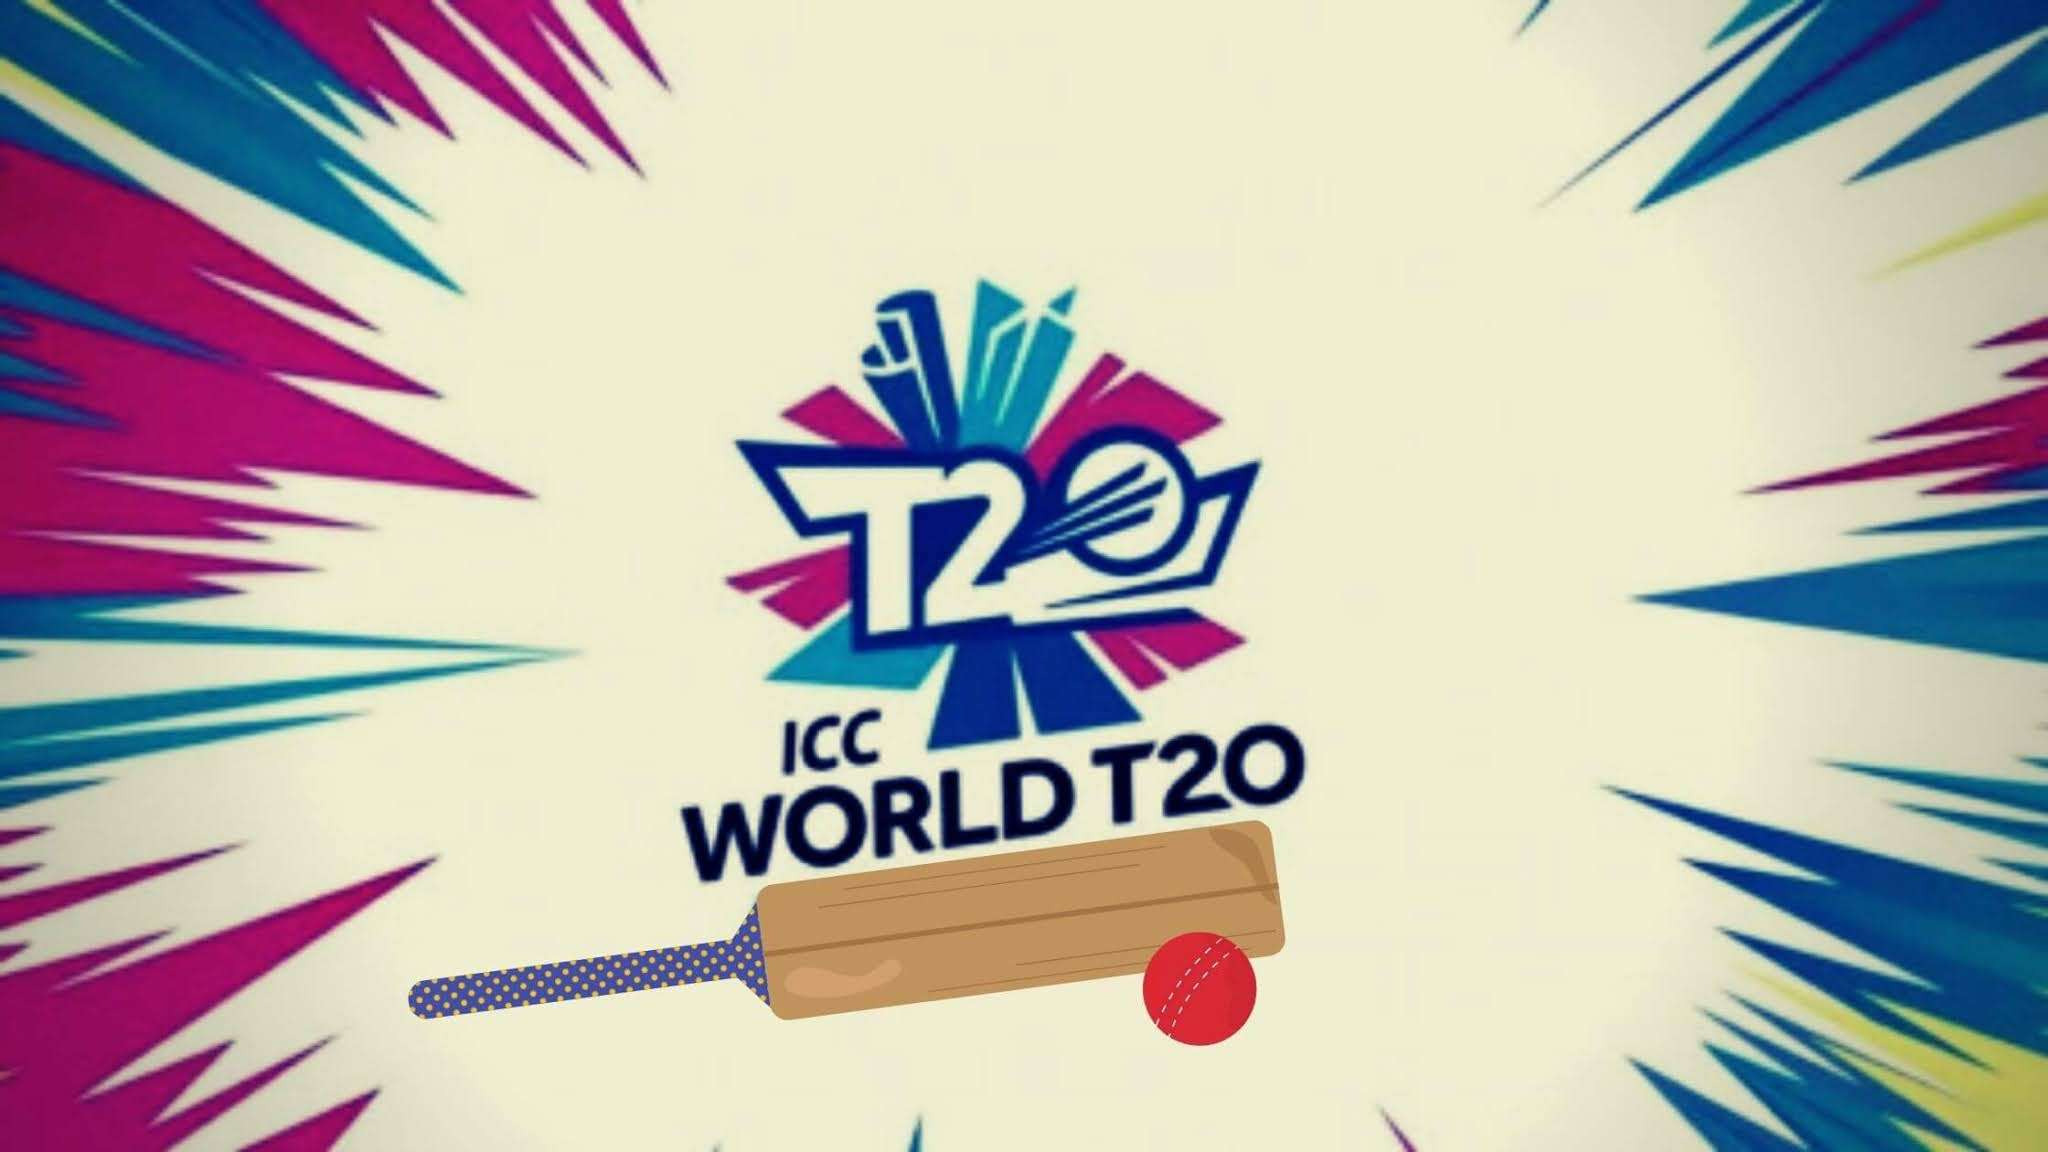 Icc world cup 2021 schedule